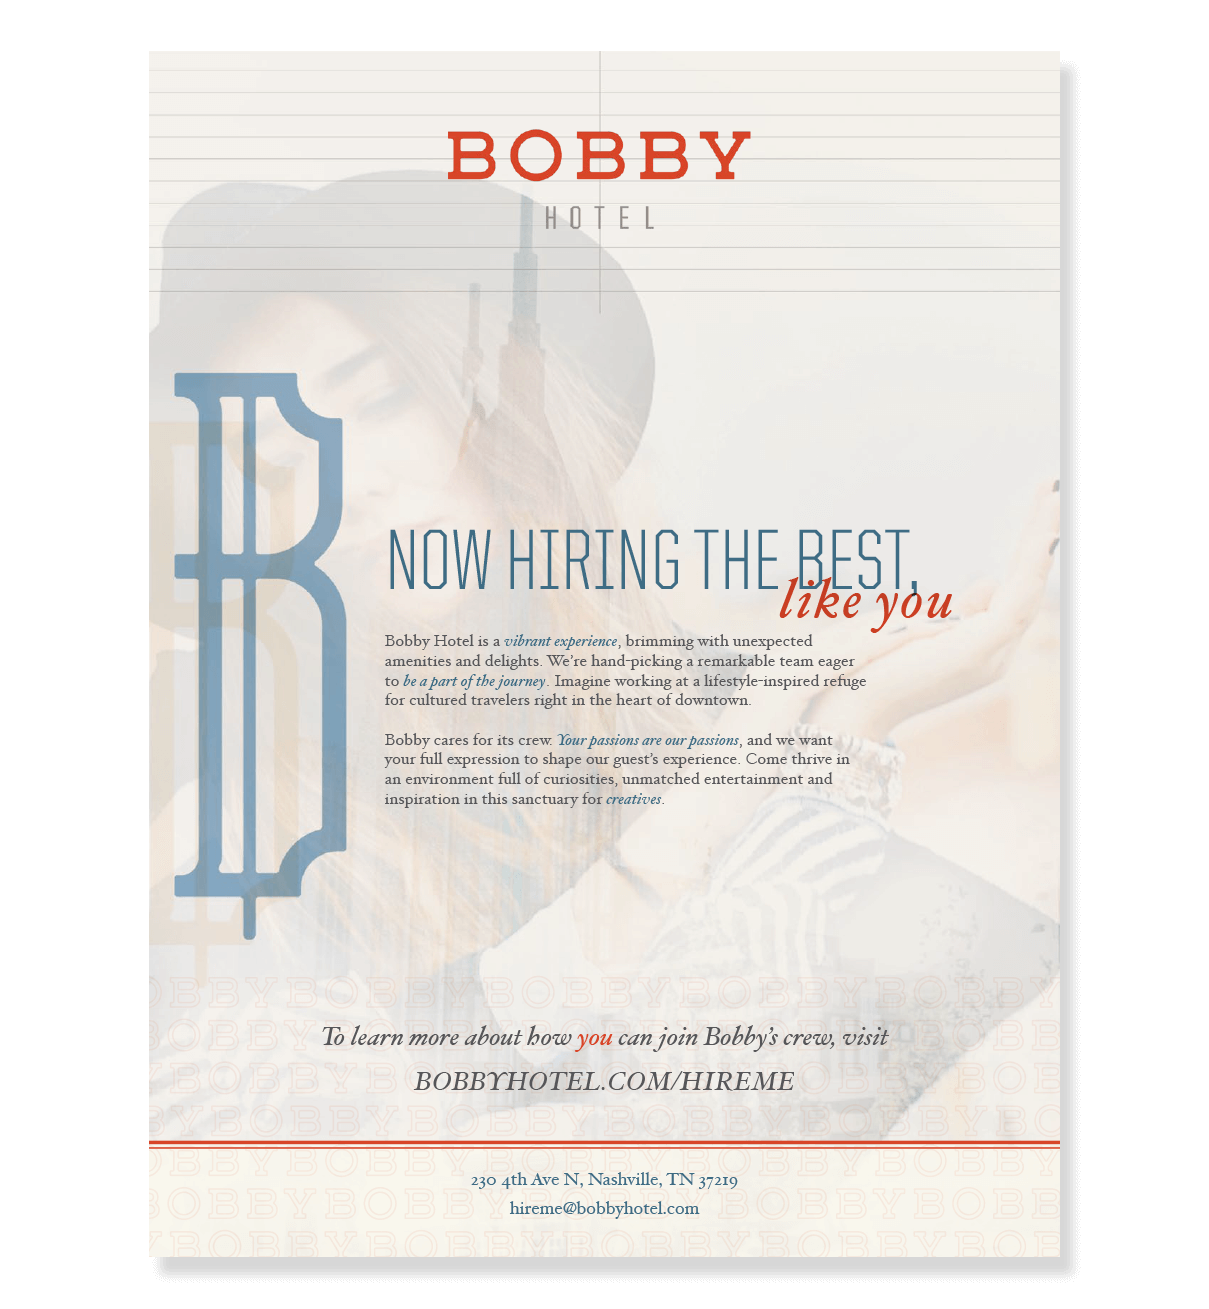 Bobby Hotel Recruitment Print Magazine Ad in Nashville, TN